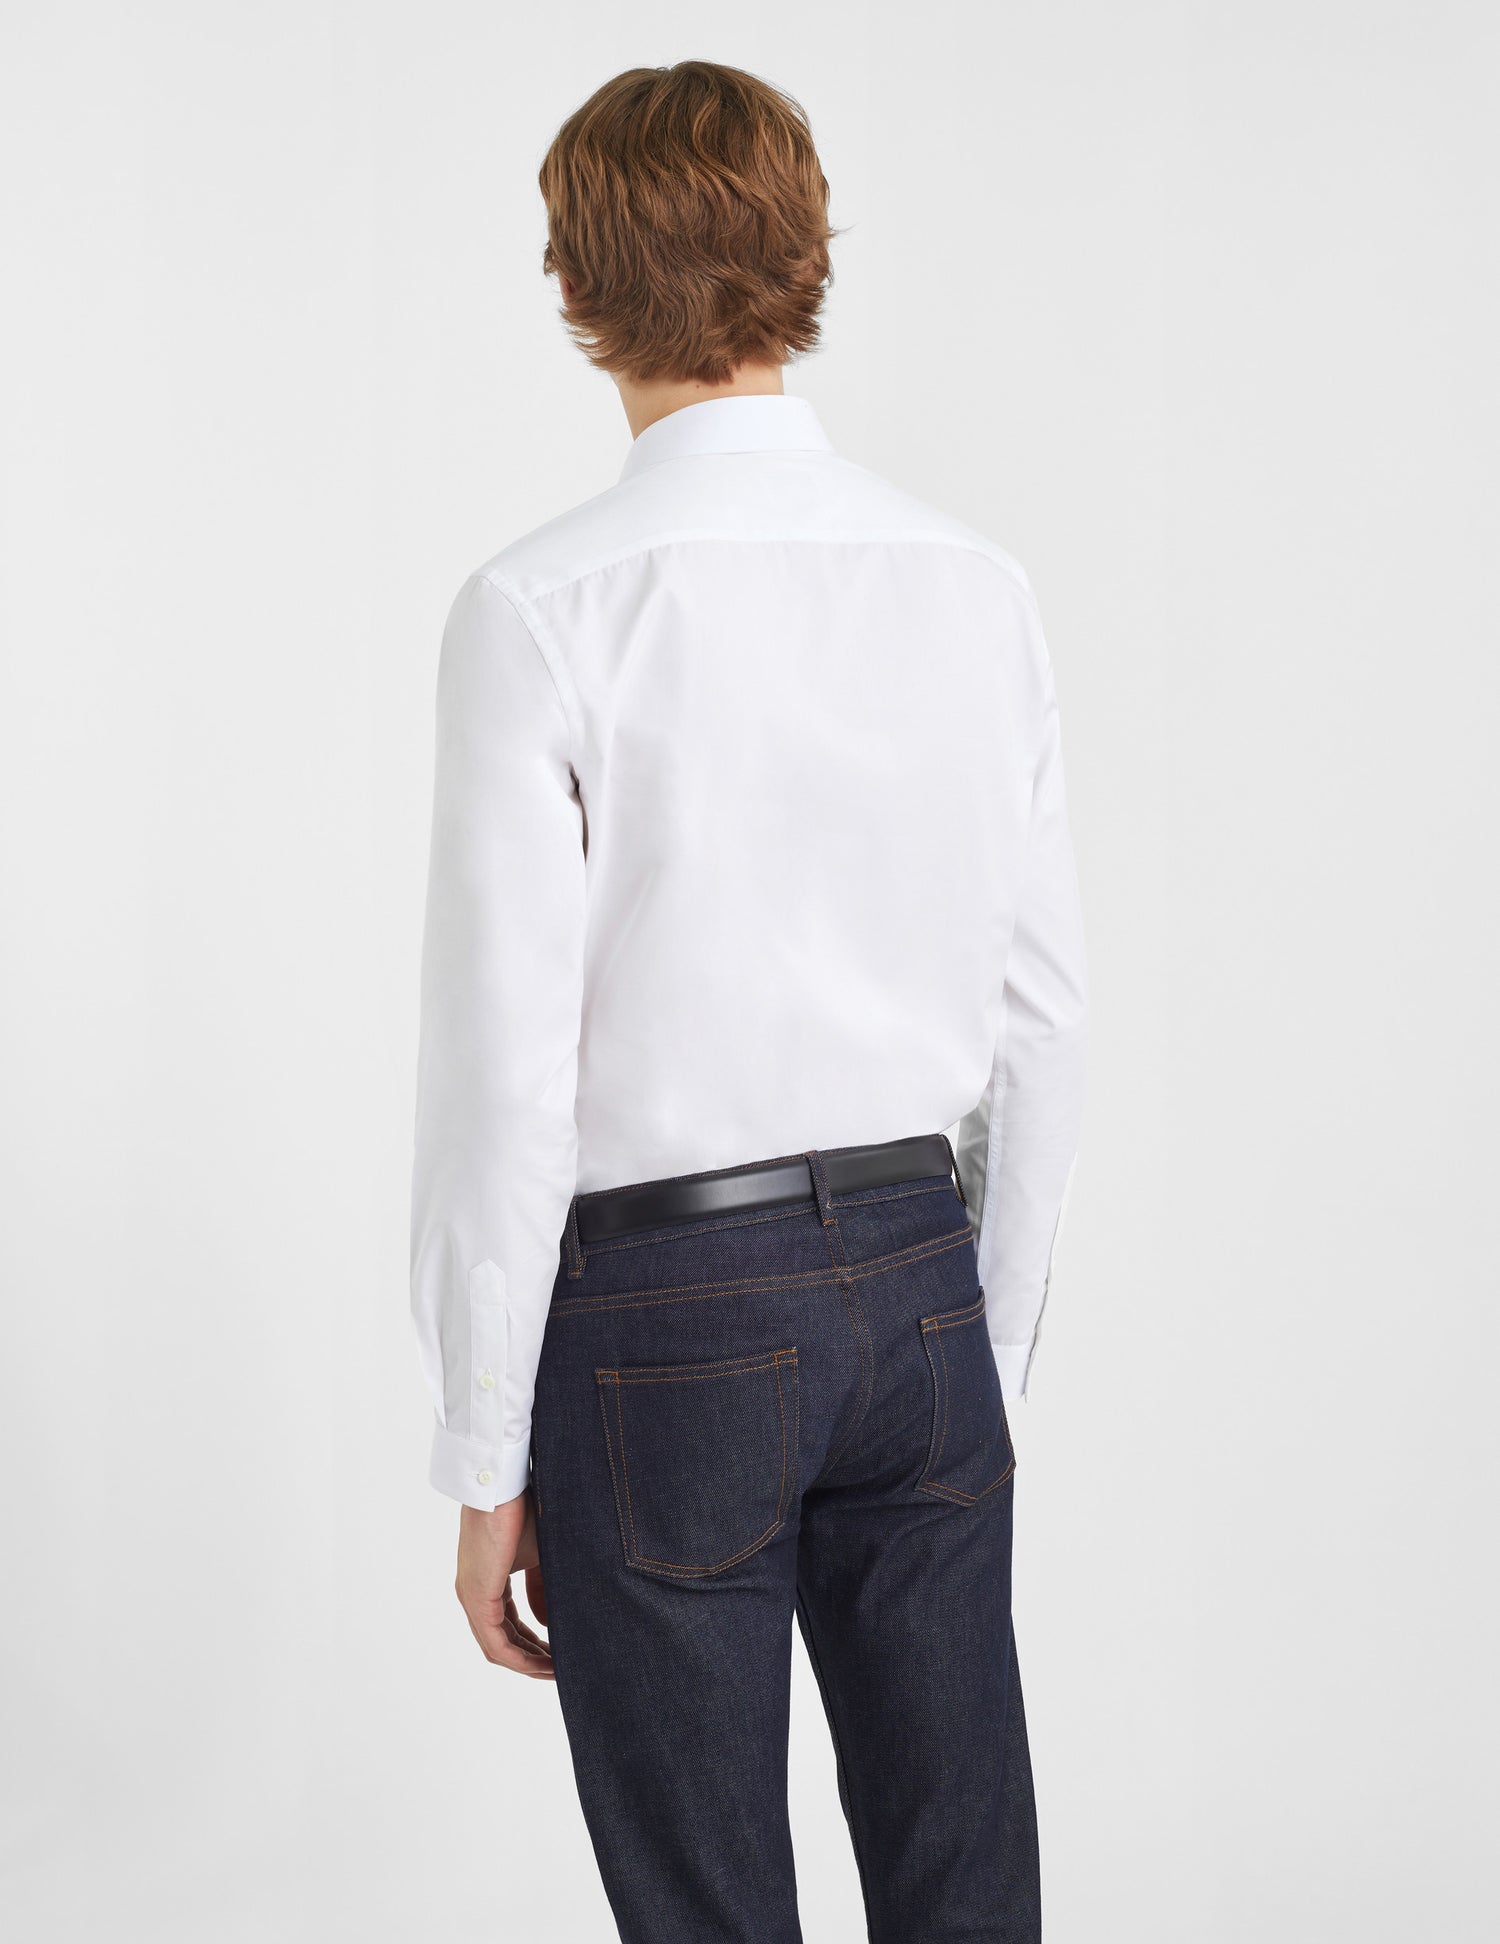 Fitted white shirt - Poplin - Thin Collar#4